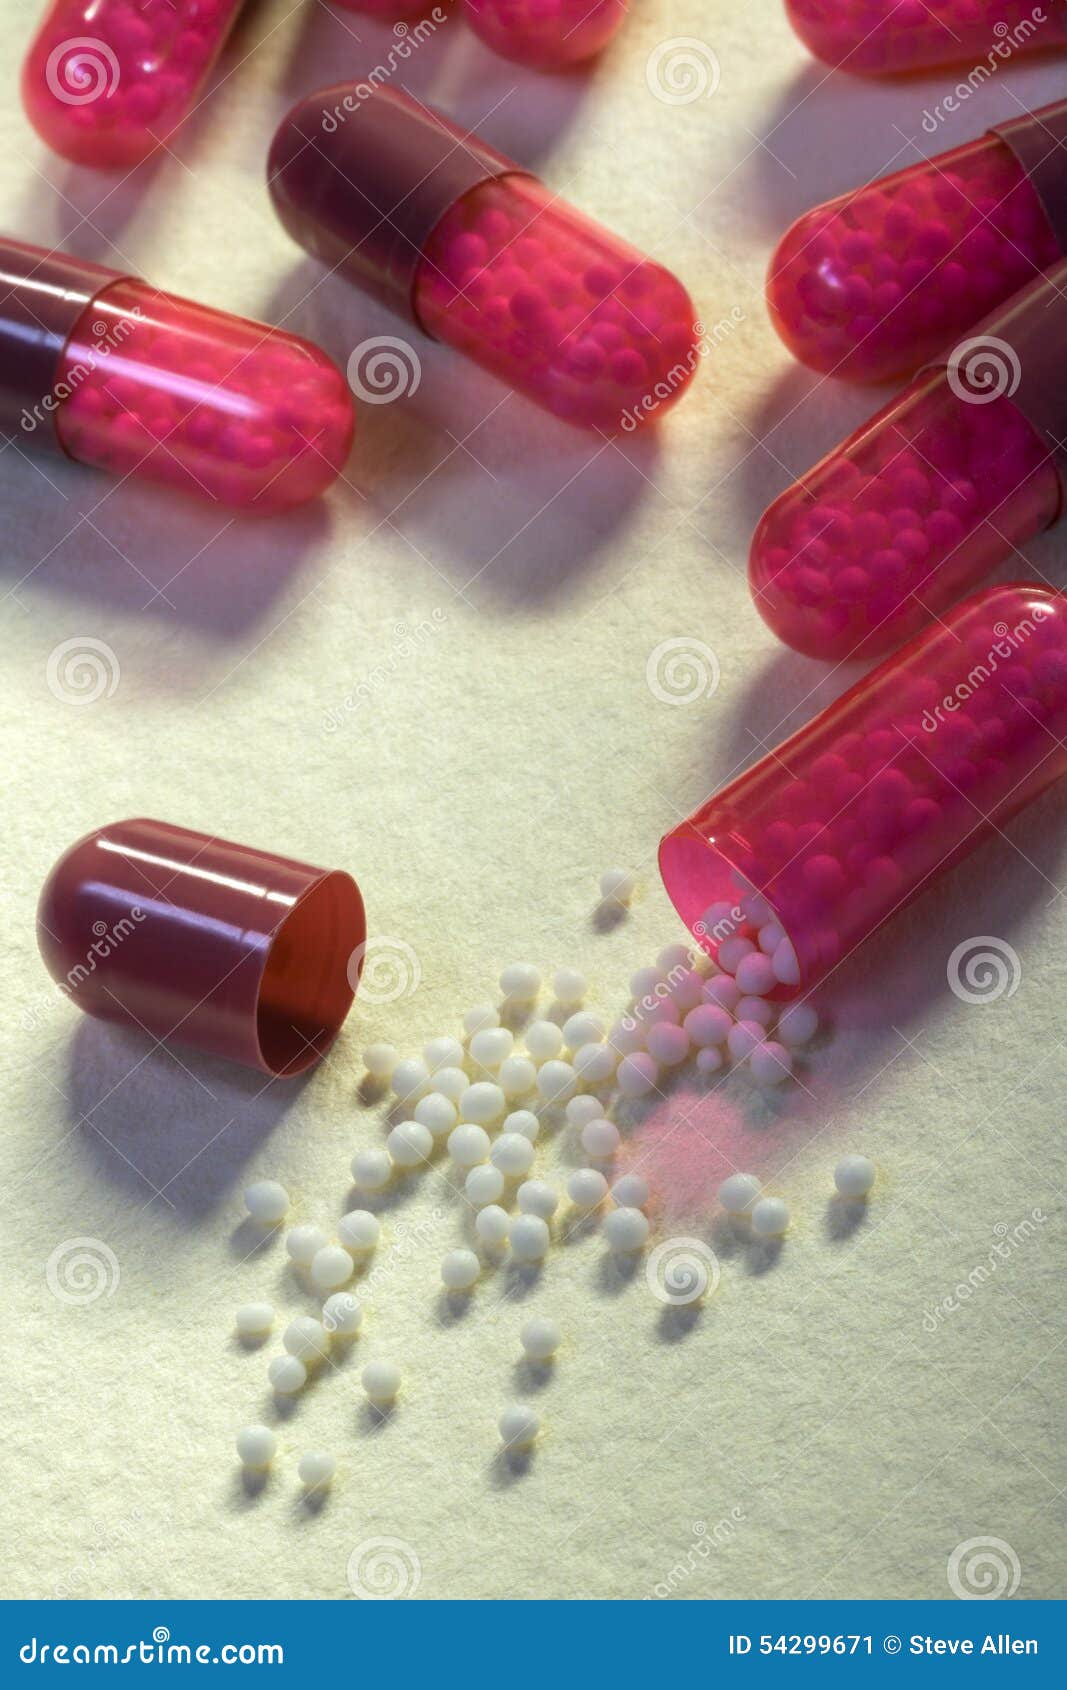 Капсула микро. Микрокапсулы лекарства. Капсулы с микрокапсулами. Микрокапсулы лекарственная форма. Микрокапсулы таблетки.